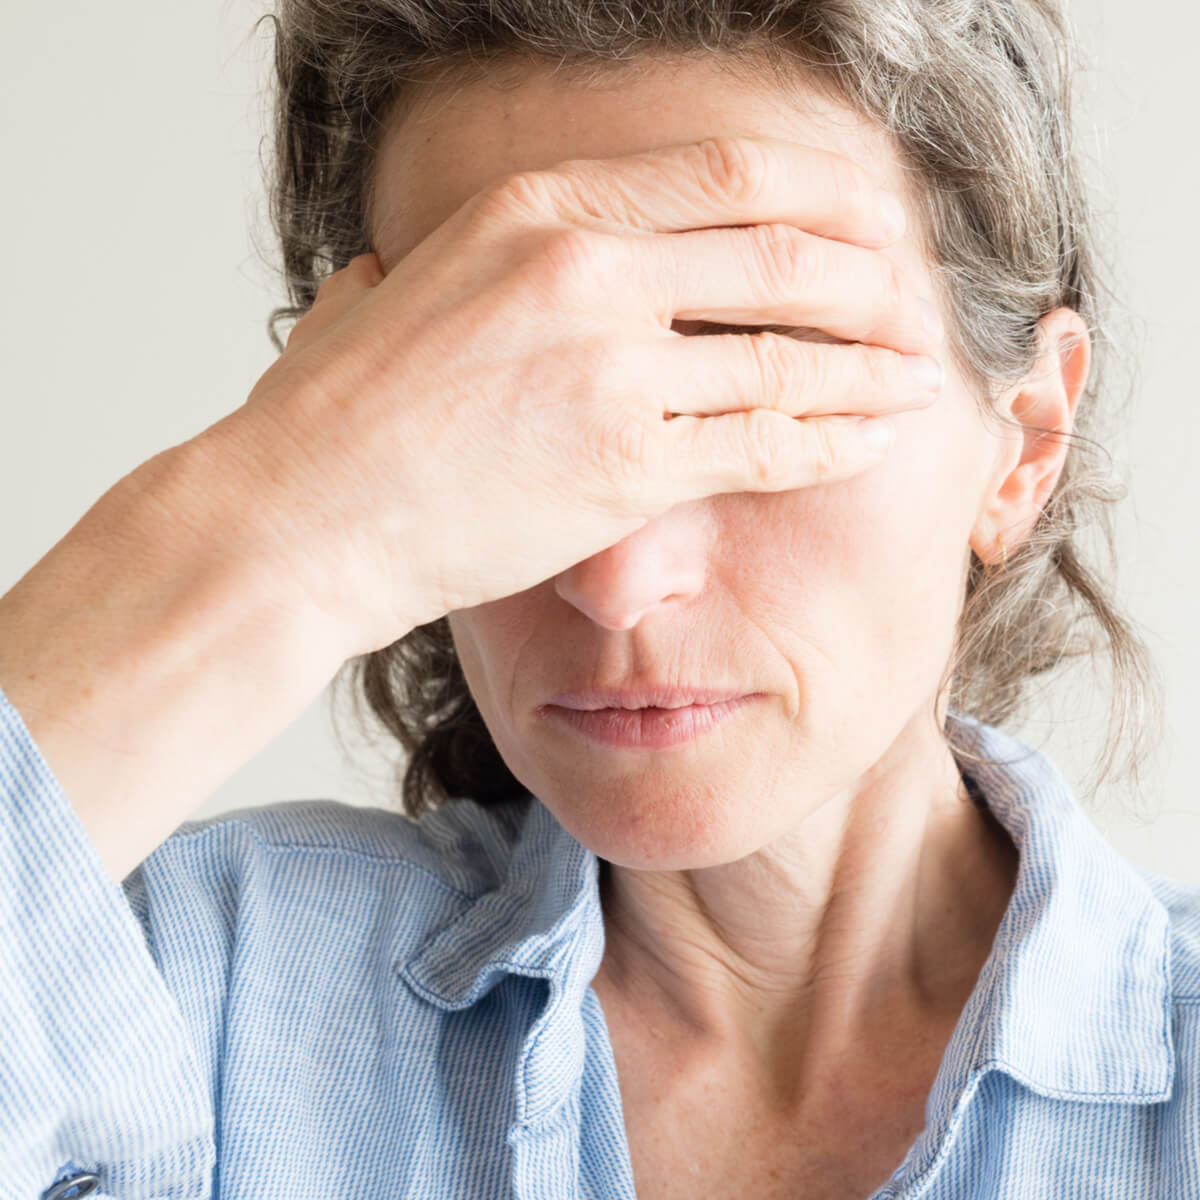 depresija u menopauzi je česta pojava